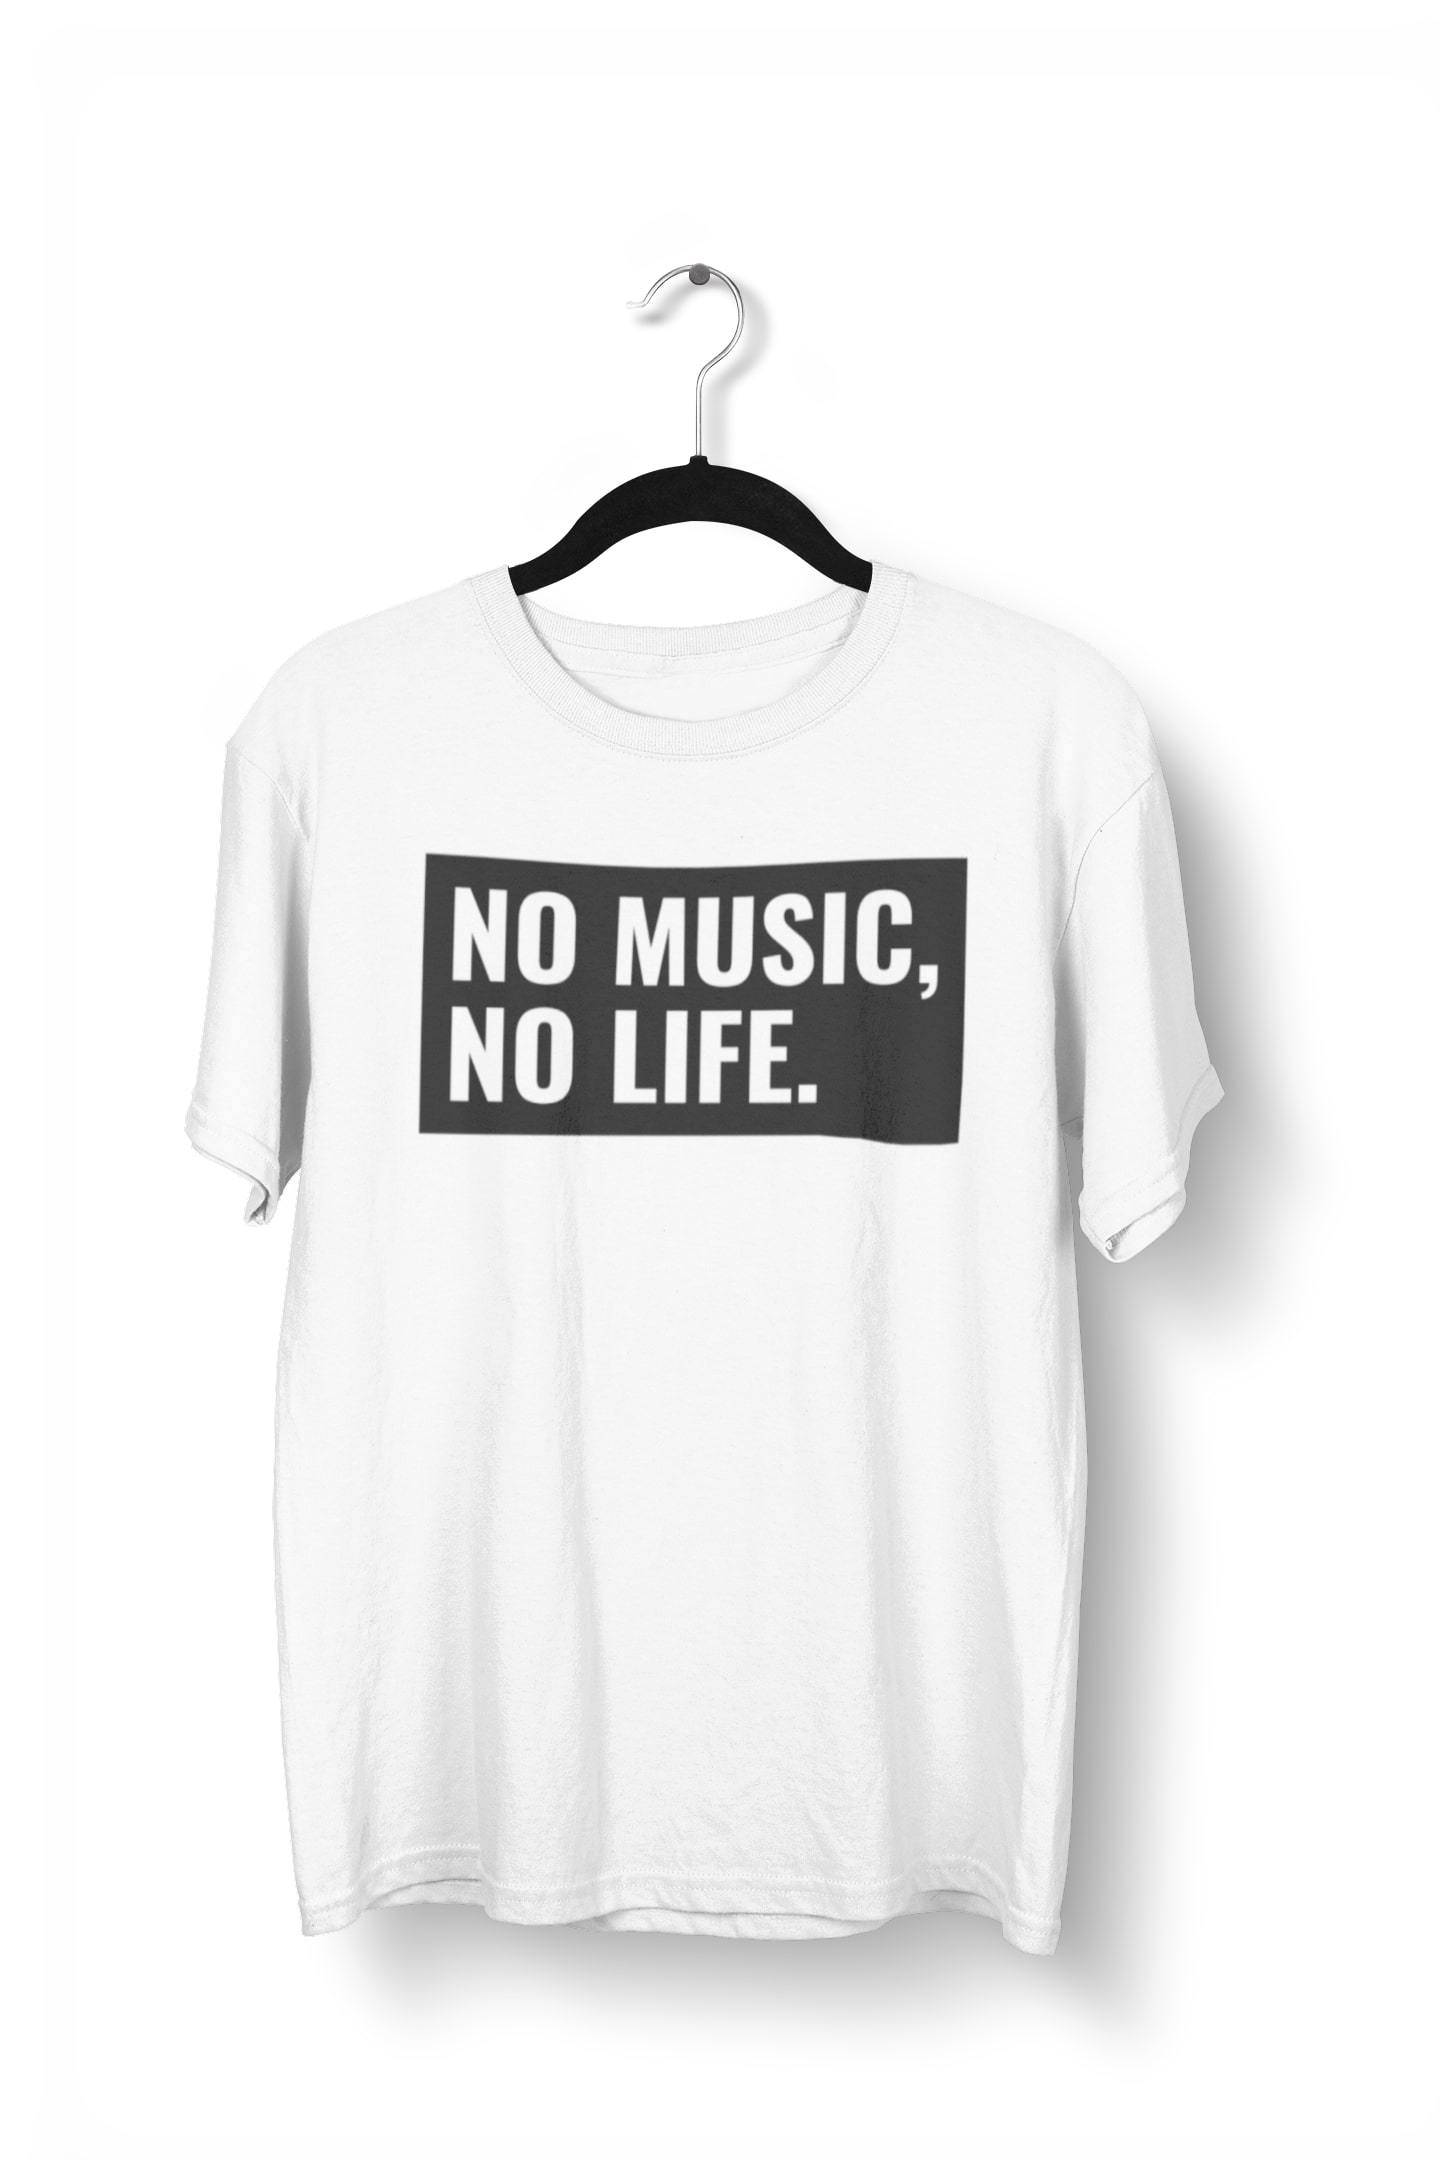 No Music No Life T-Shirt for Men - Insane Tees